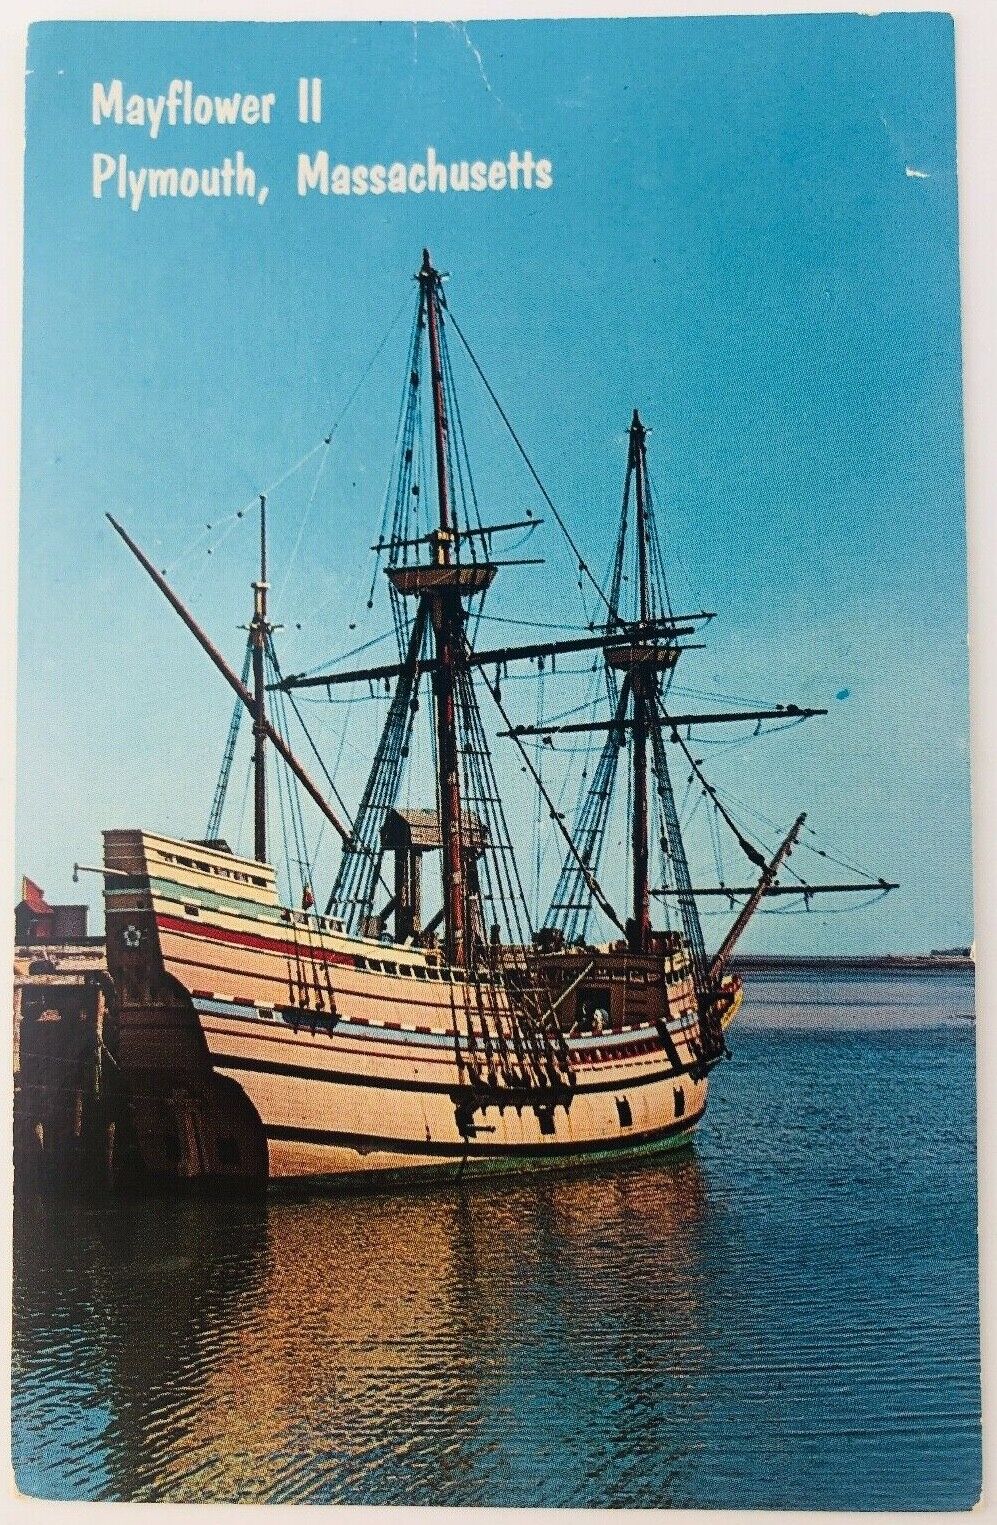 Vintage Plymouth Massachusetts MA Mayflower II Replica of Original 1964